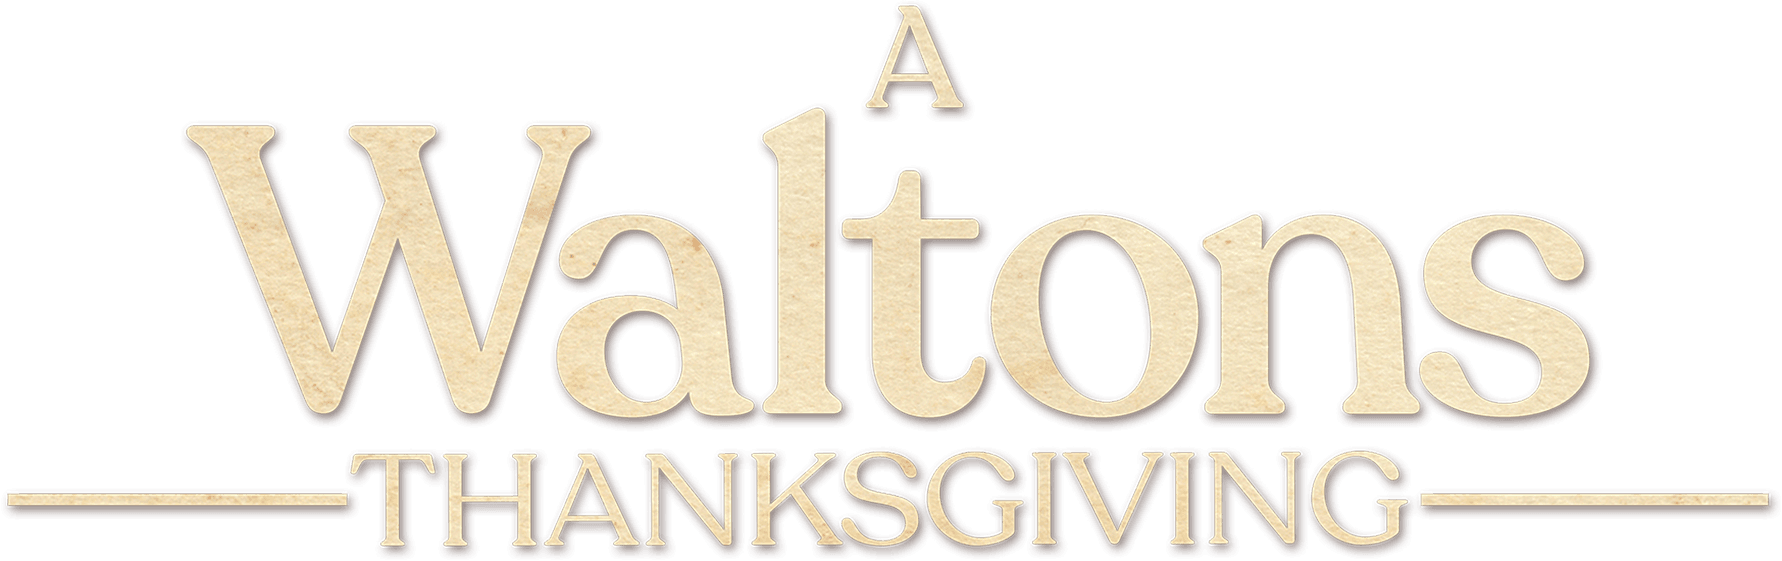 A Waltons Thanksgiving logo